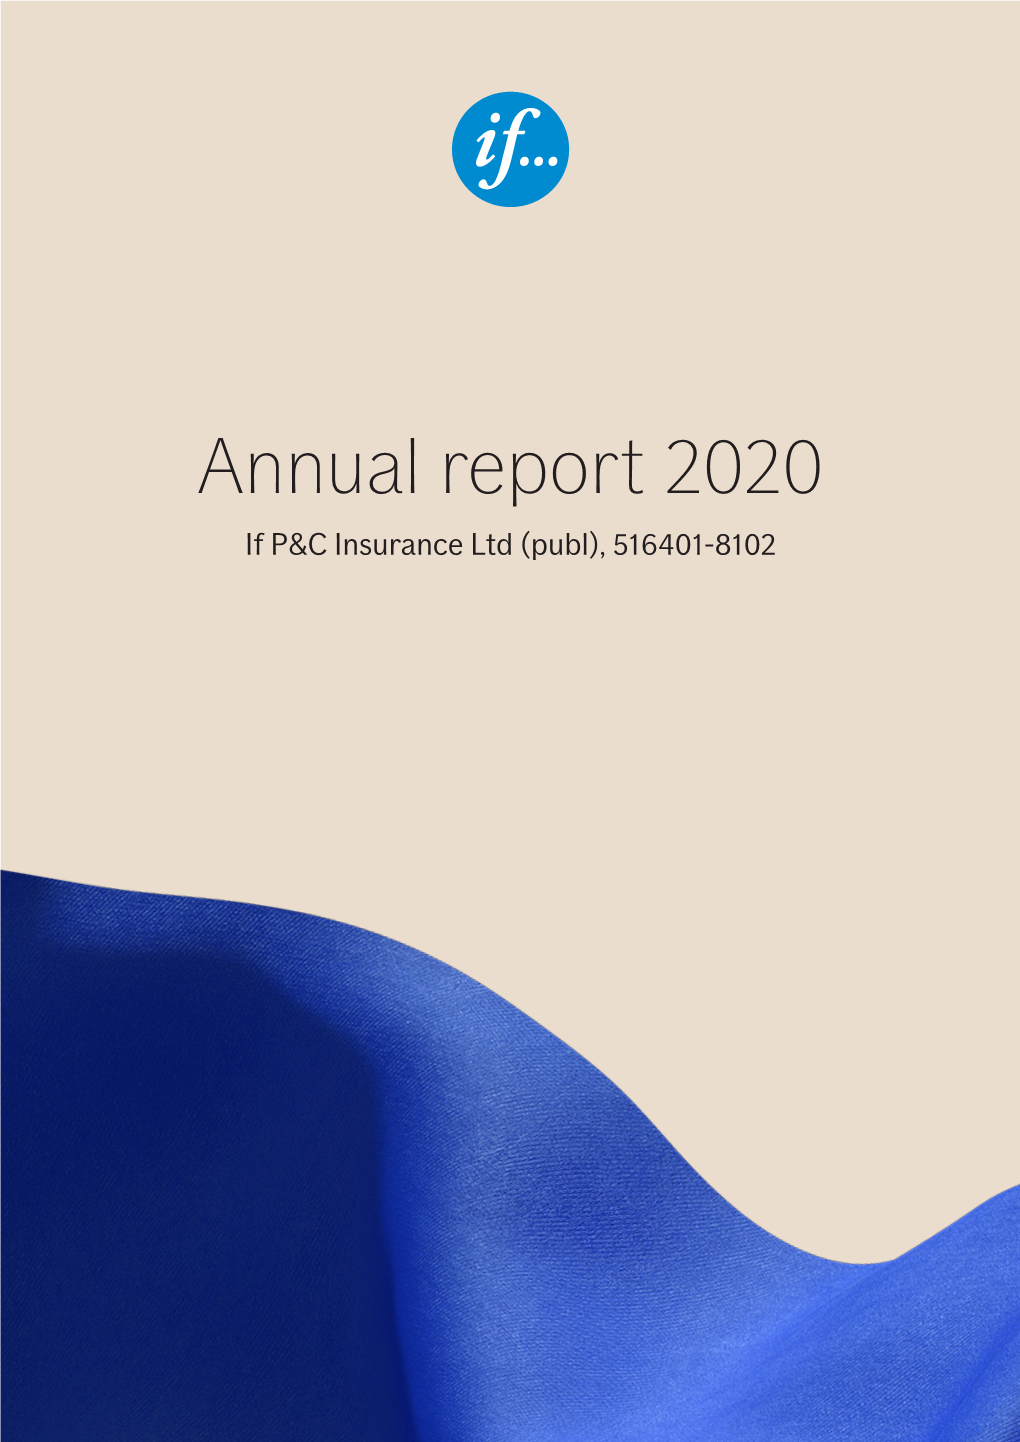 Annual Report 2020 If P&C Insurance Ltd (Publ), 516401-8102 Contents